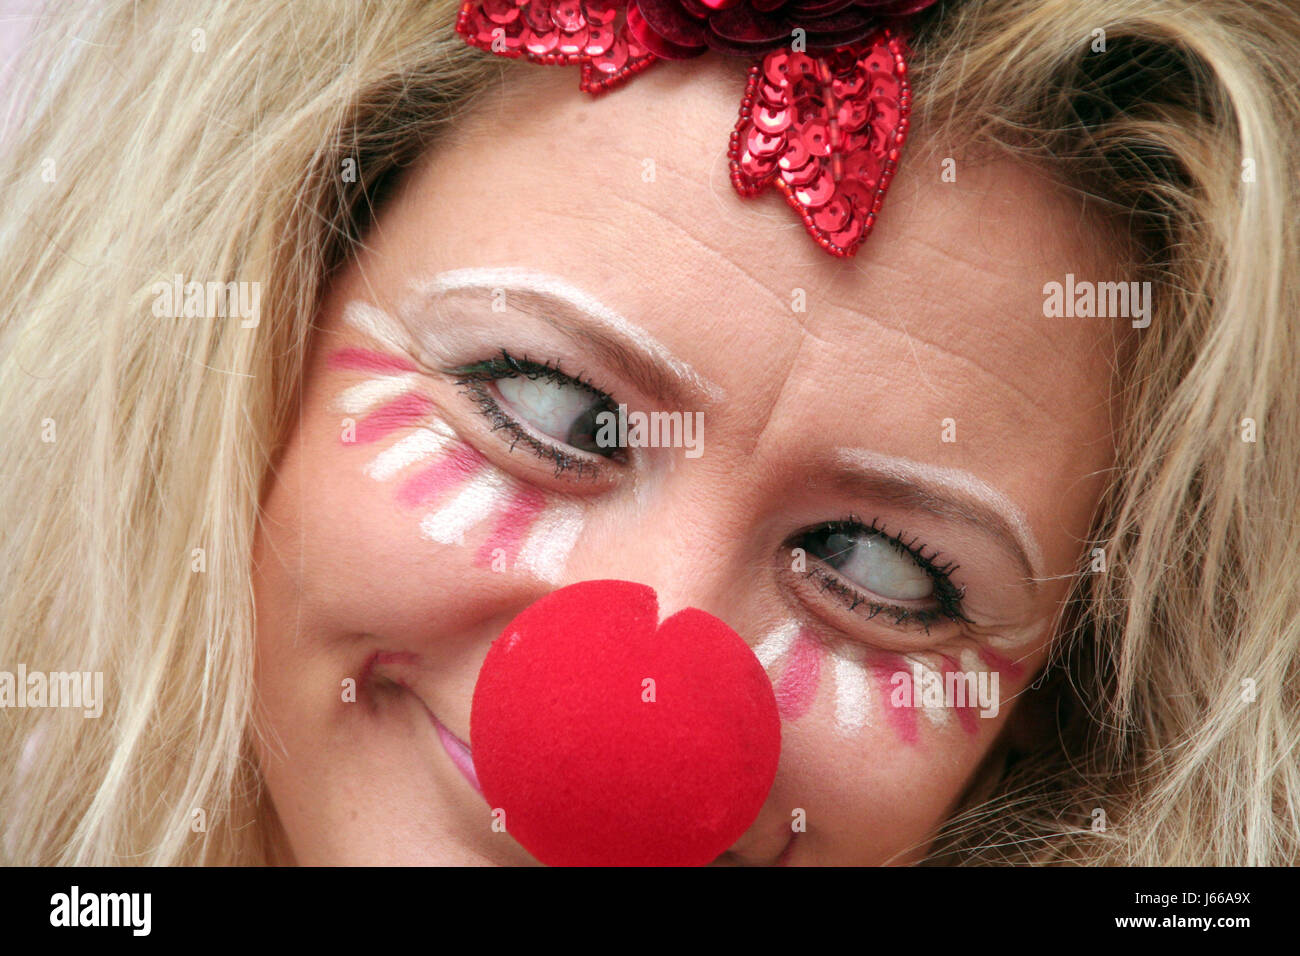 kostümierte Frau mit roter Nase Stockfoto